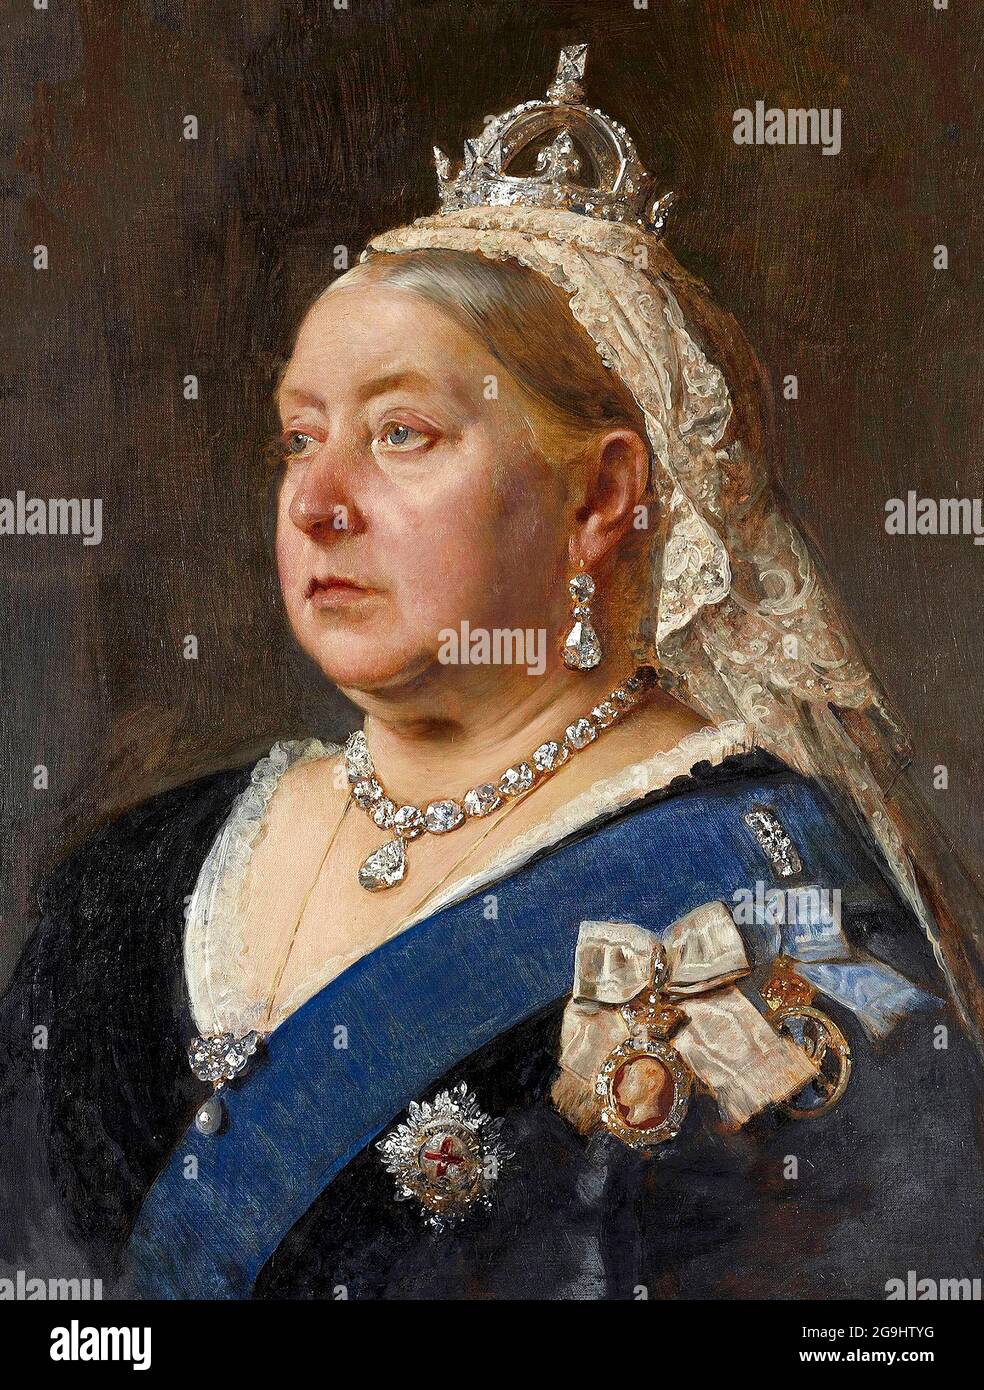 Reina Victoria. Retrato de Heinrich von Angeli, óleo sobre lienzo, 1890 Foto de stock